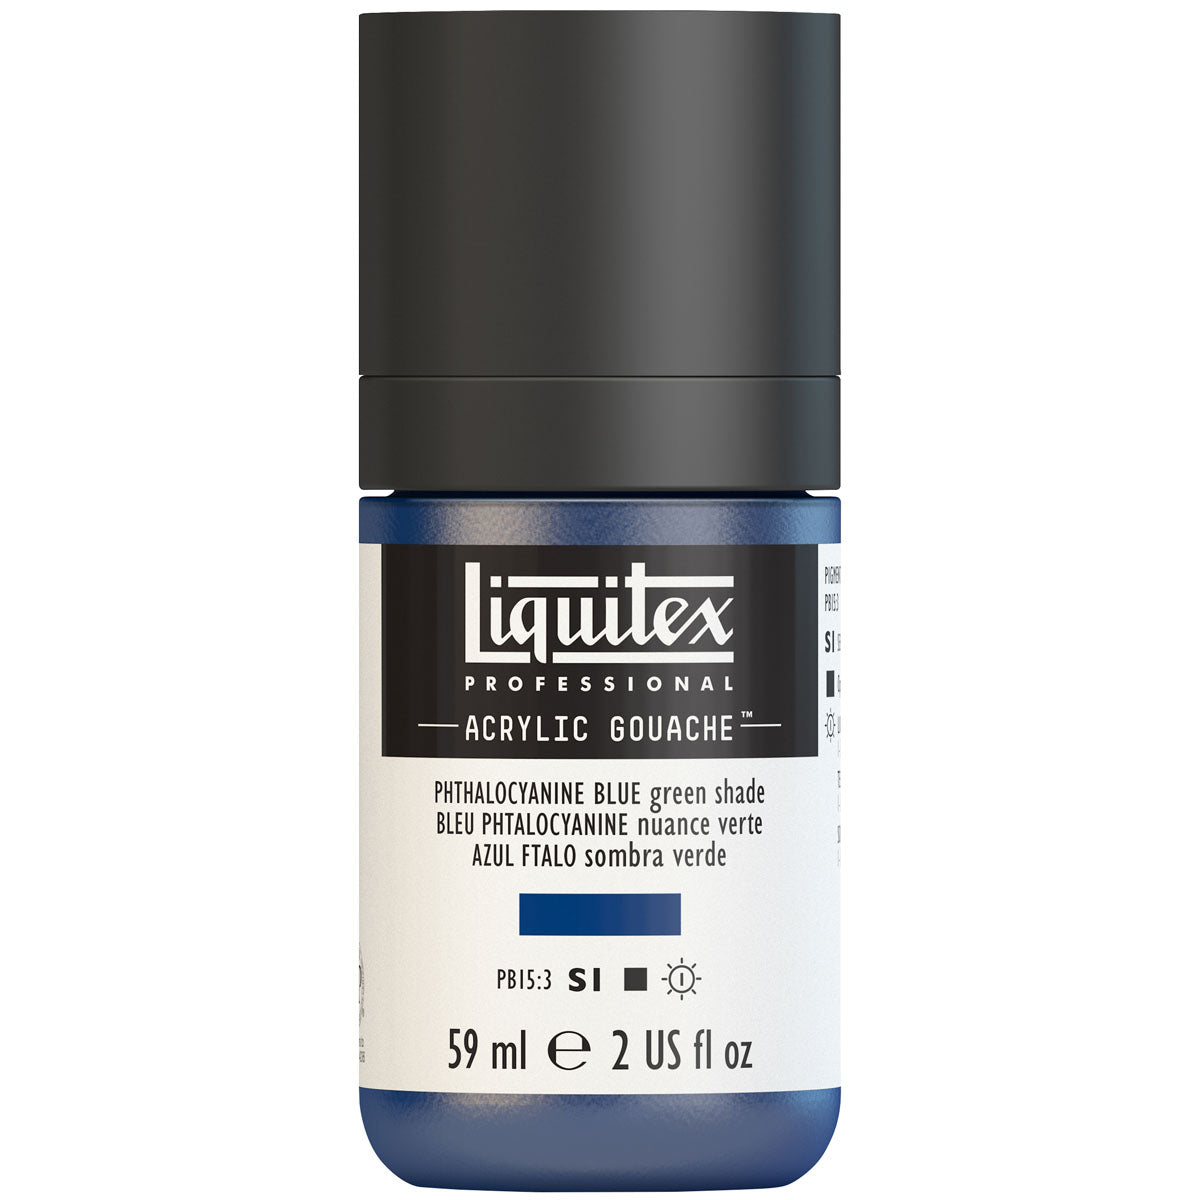 Liquitex - Acrylic Gouache 59ml S1 - Phthalocyanine Blue Green Shade